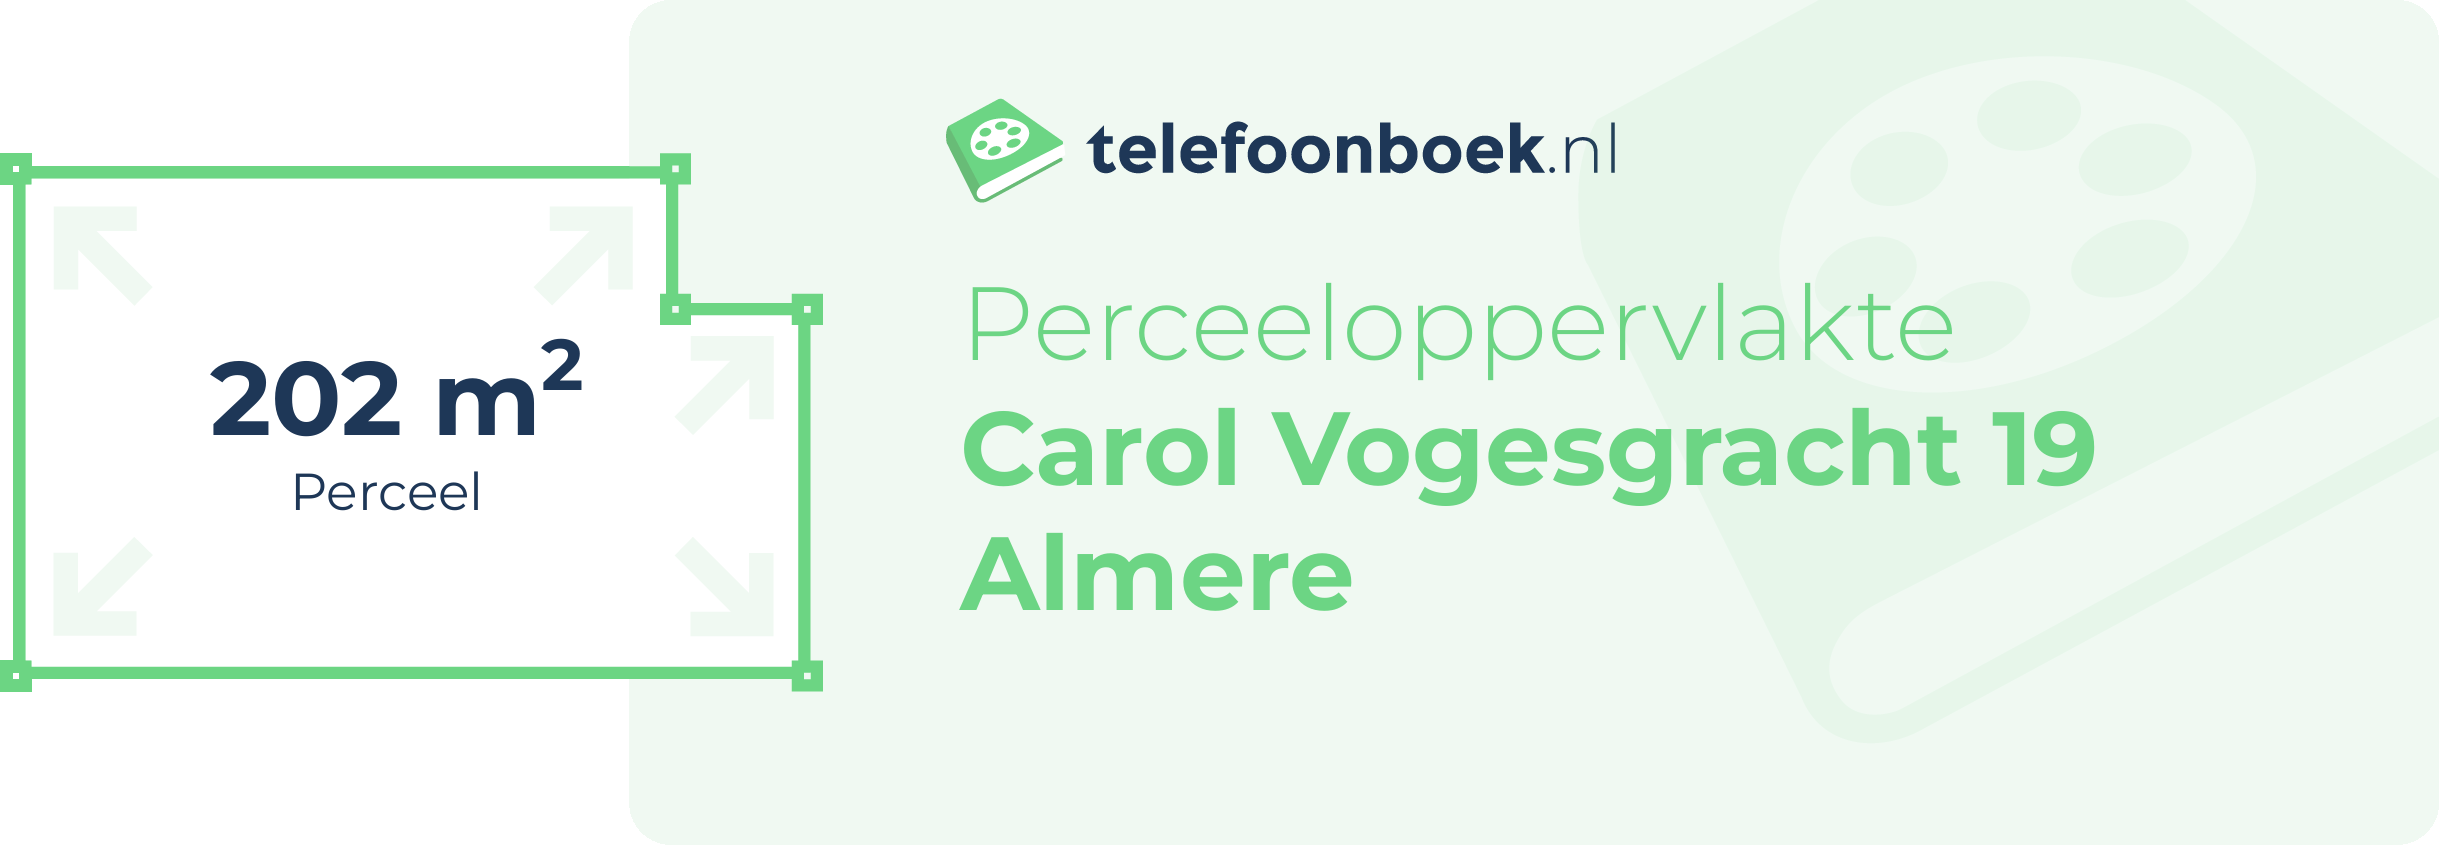 Perceeloppervlakte Carol Vogesgracht 19 Almere